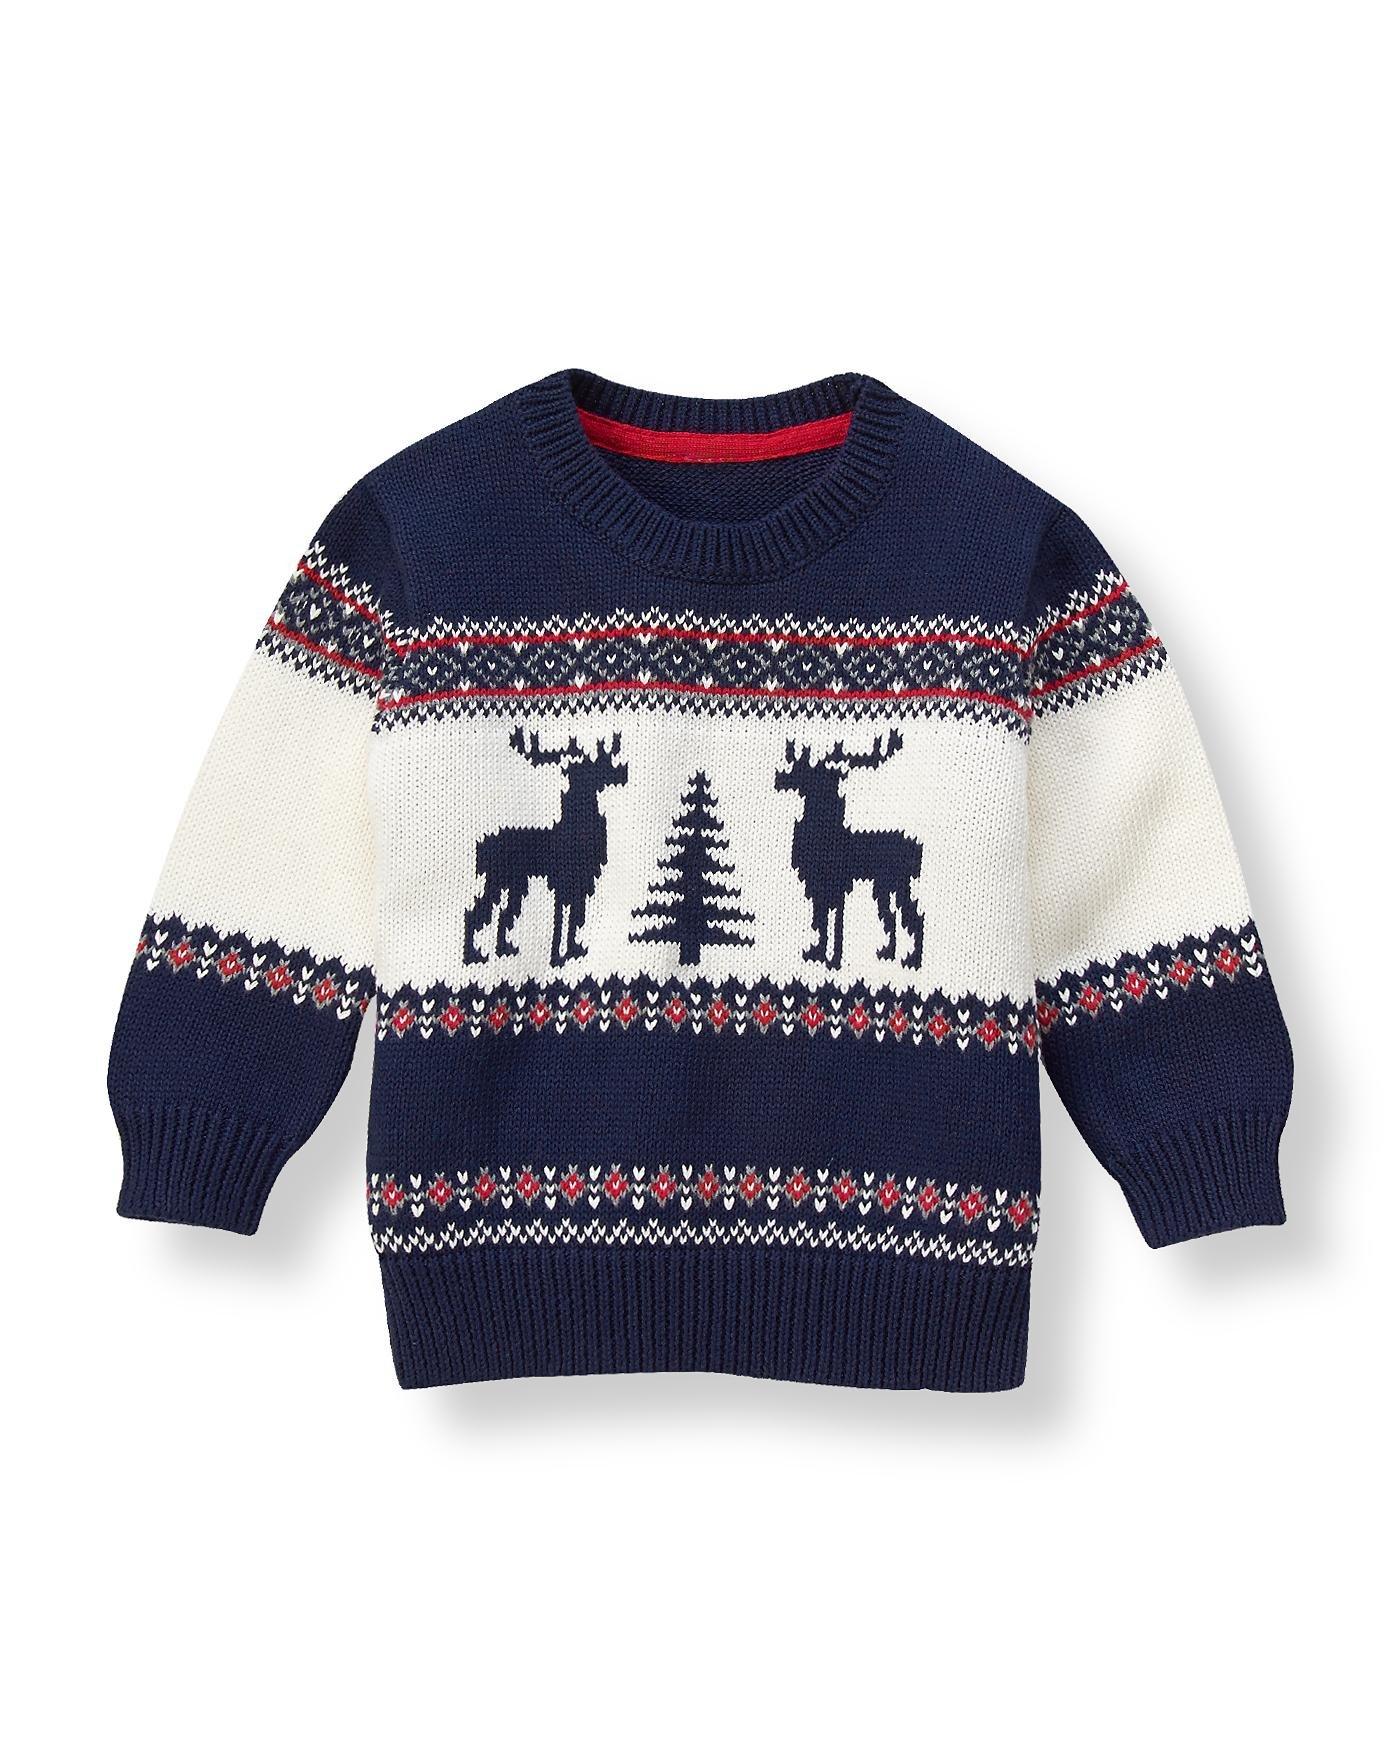 Boy Navy Reindeer Fair Isle Sweater by Janie and Jack